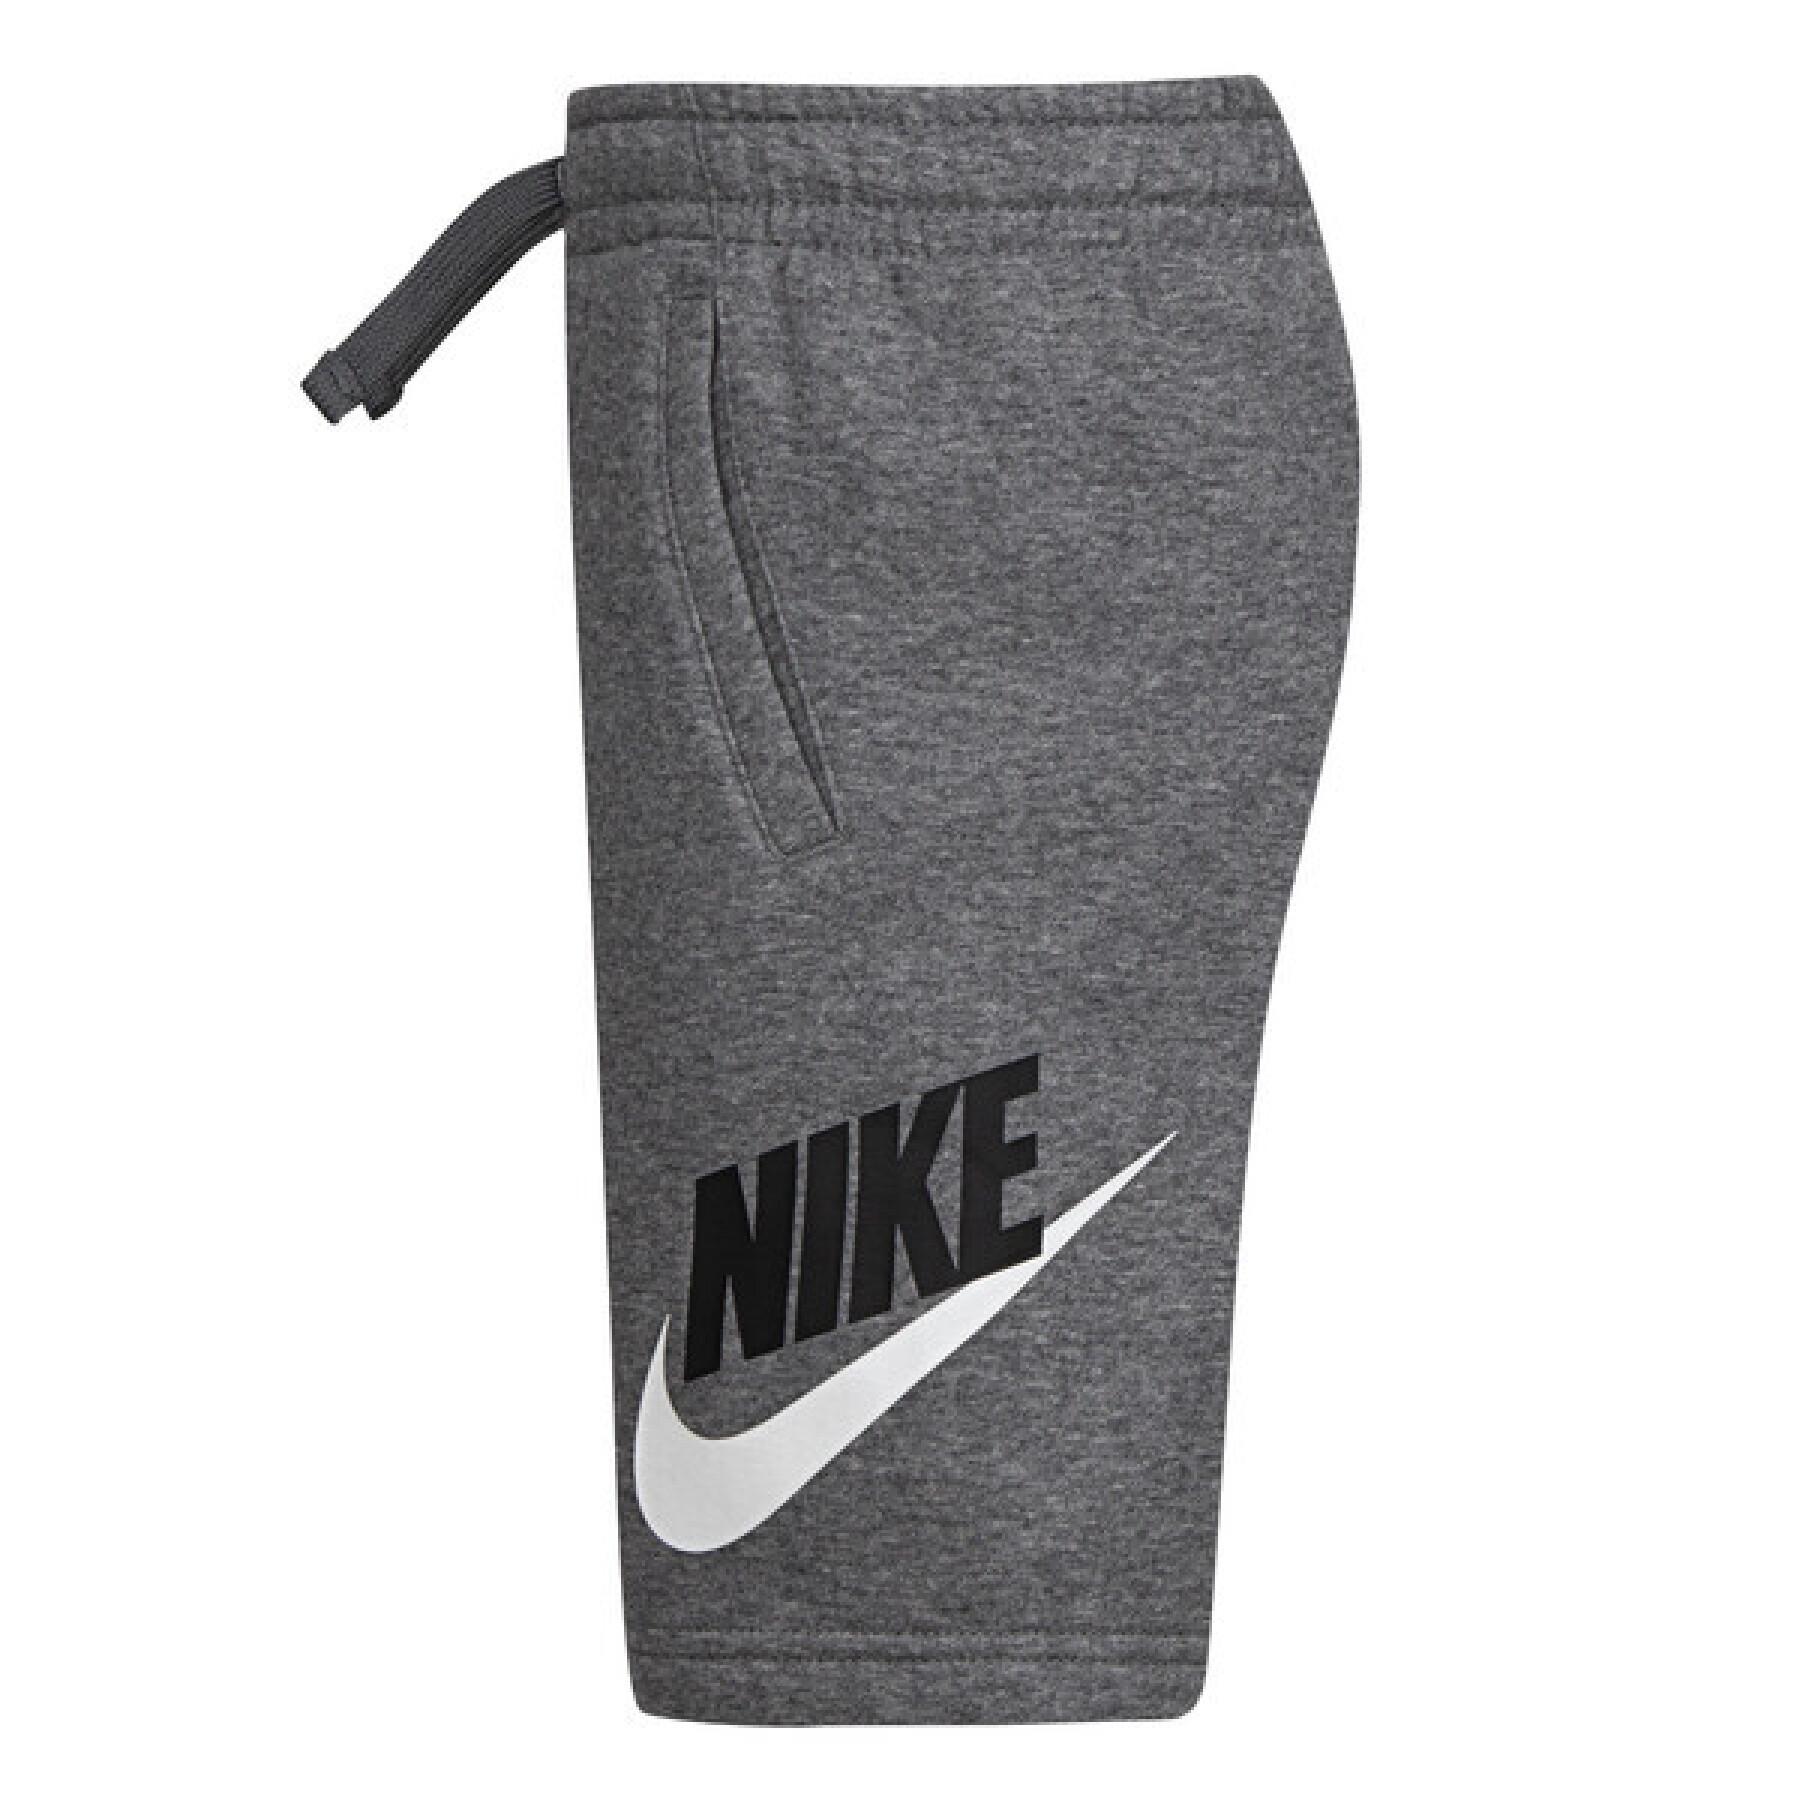 Children\'s shorts Nike Club HBR FT - Nike - Brands - Lifestyle